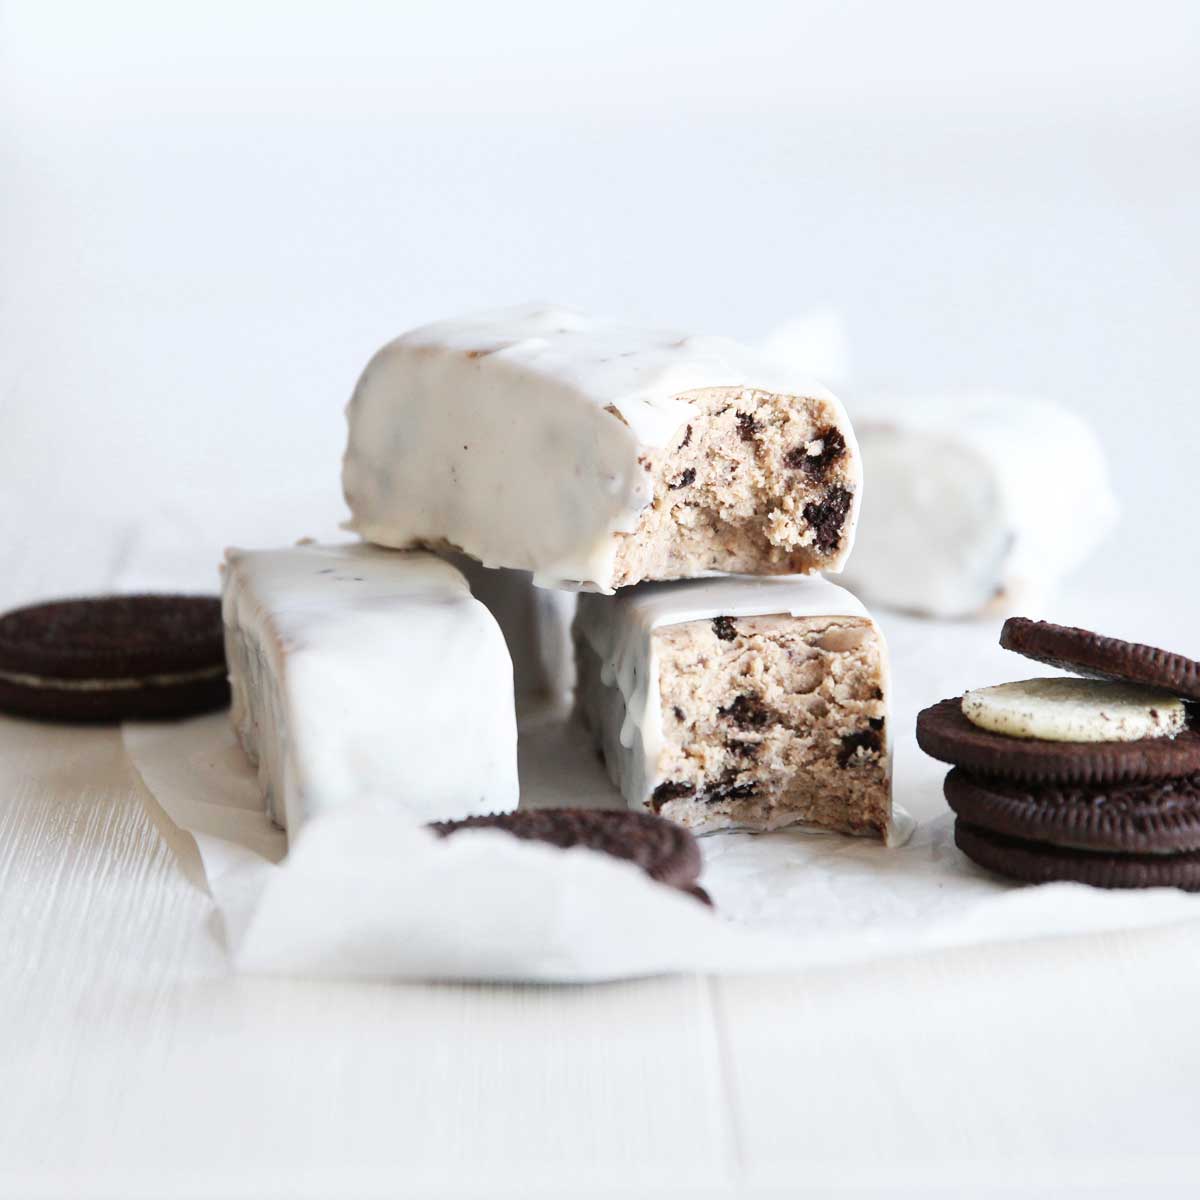 Homemade Oreo Cookies and Cream Protein Bars (Easy, No-Bake Recipe) - Almond Joy Protein Bars